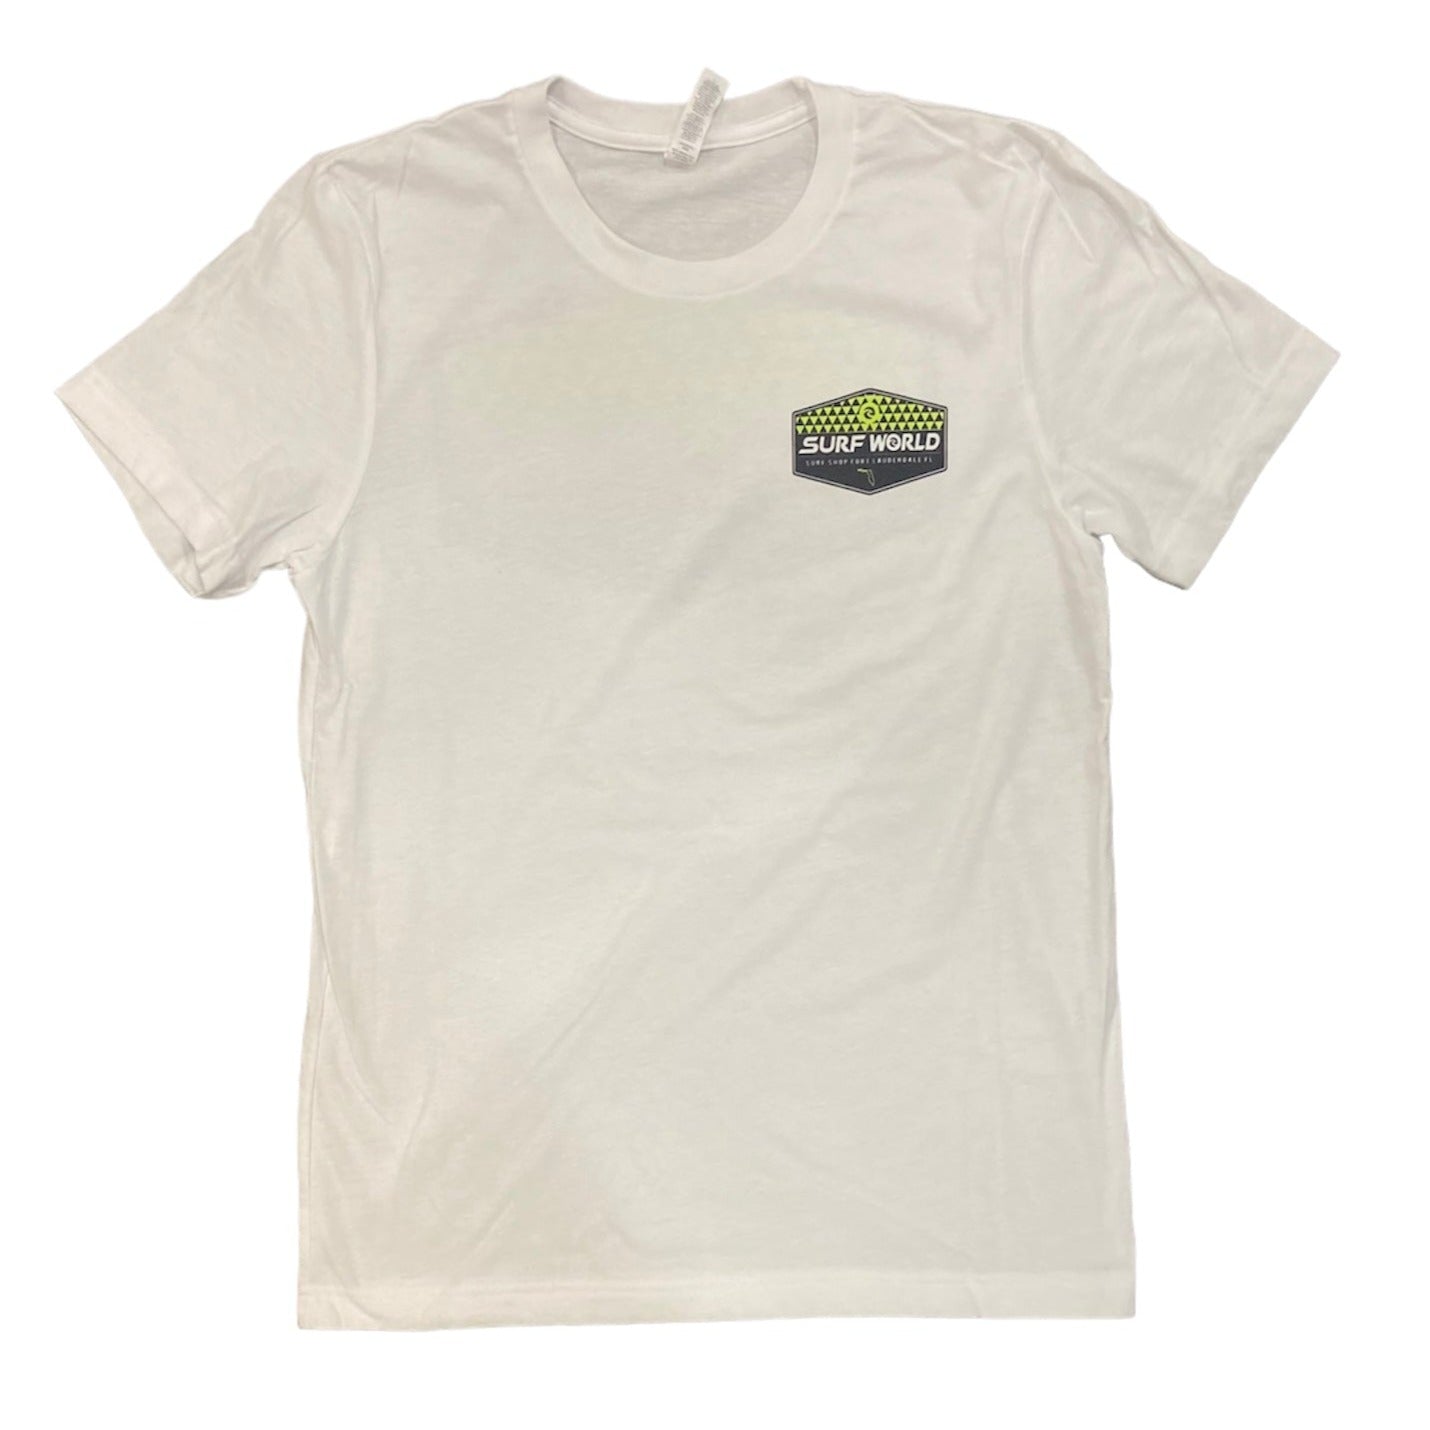 Surf World Triangles Tee Florida - White / Key Lime Mens T Shirt